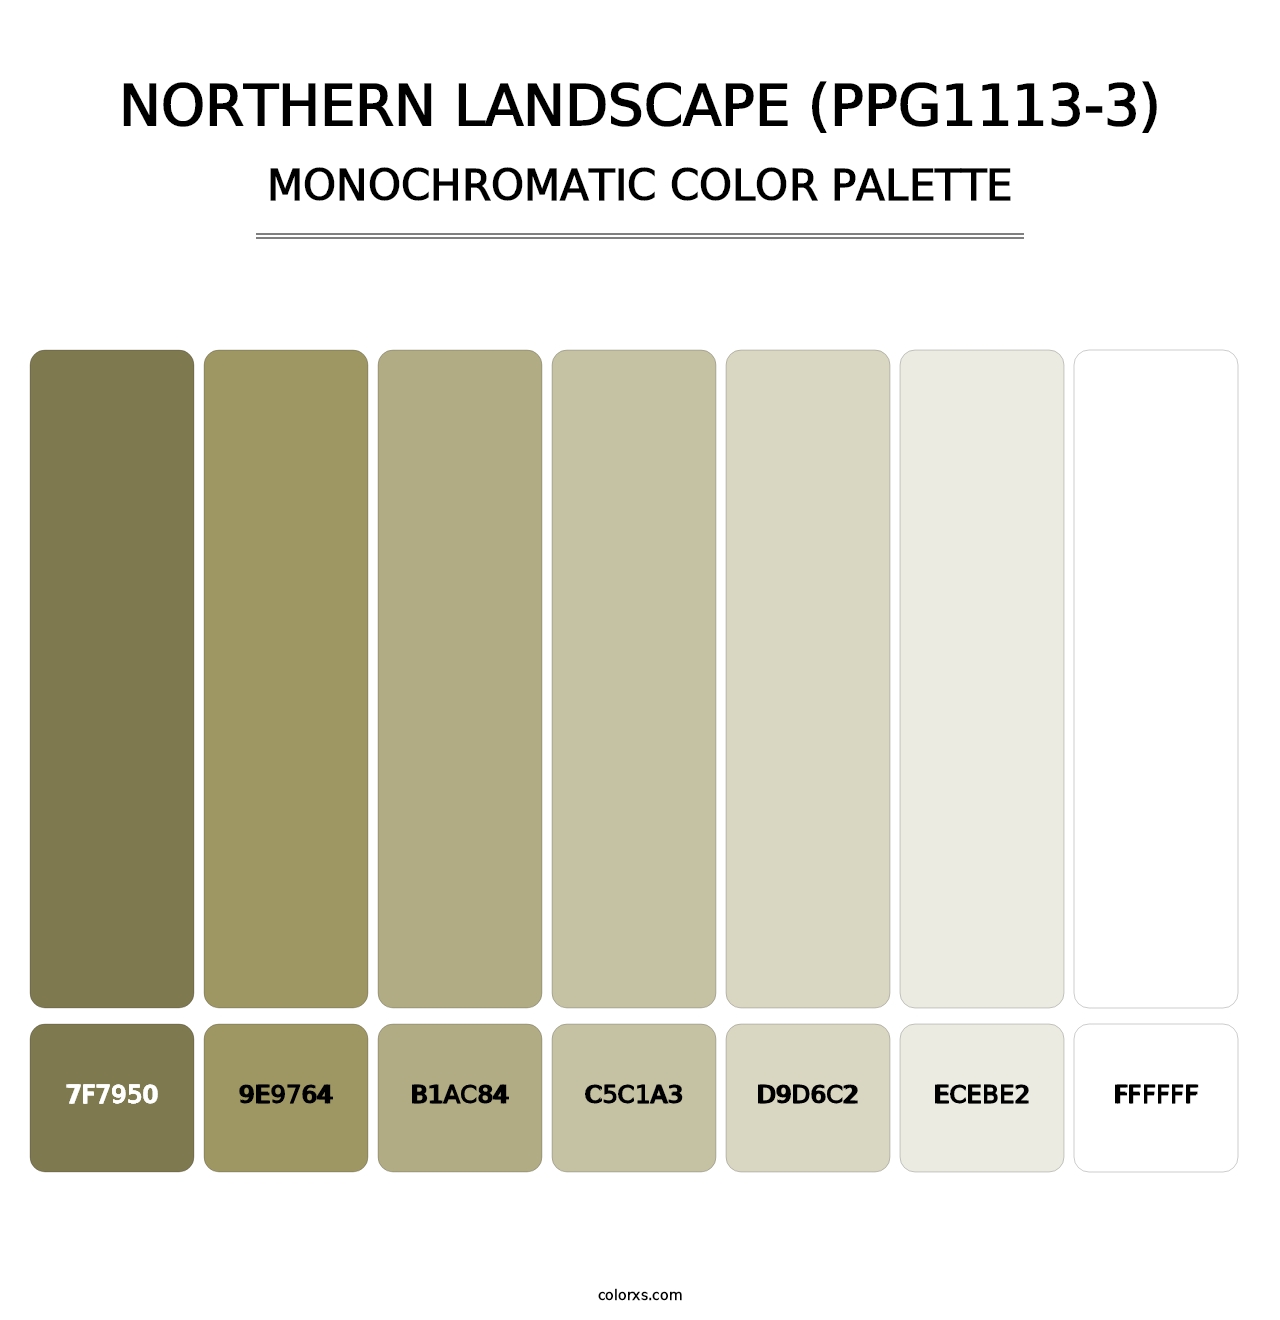 Northern Landscape (PPG1113-3) - Monochromatic Color Palette